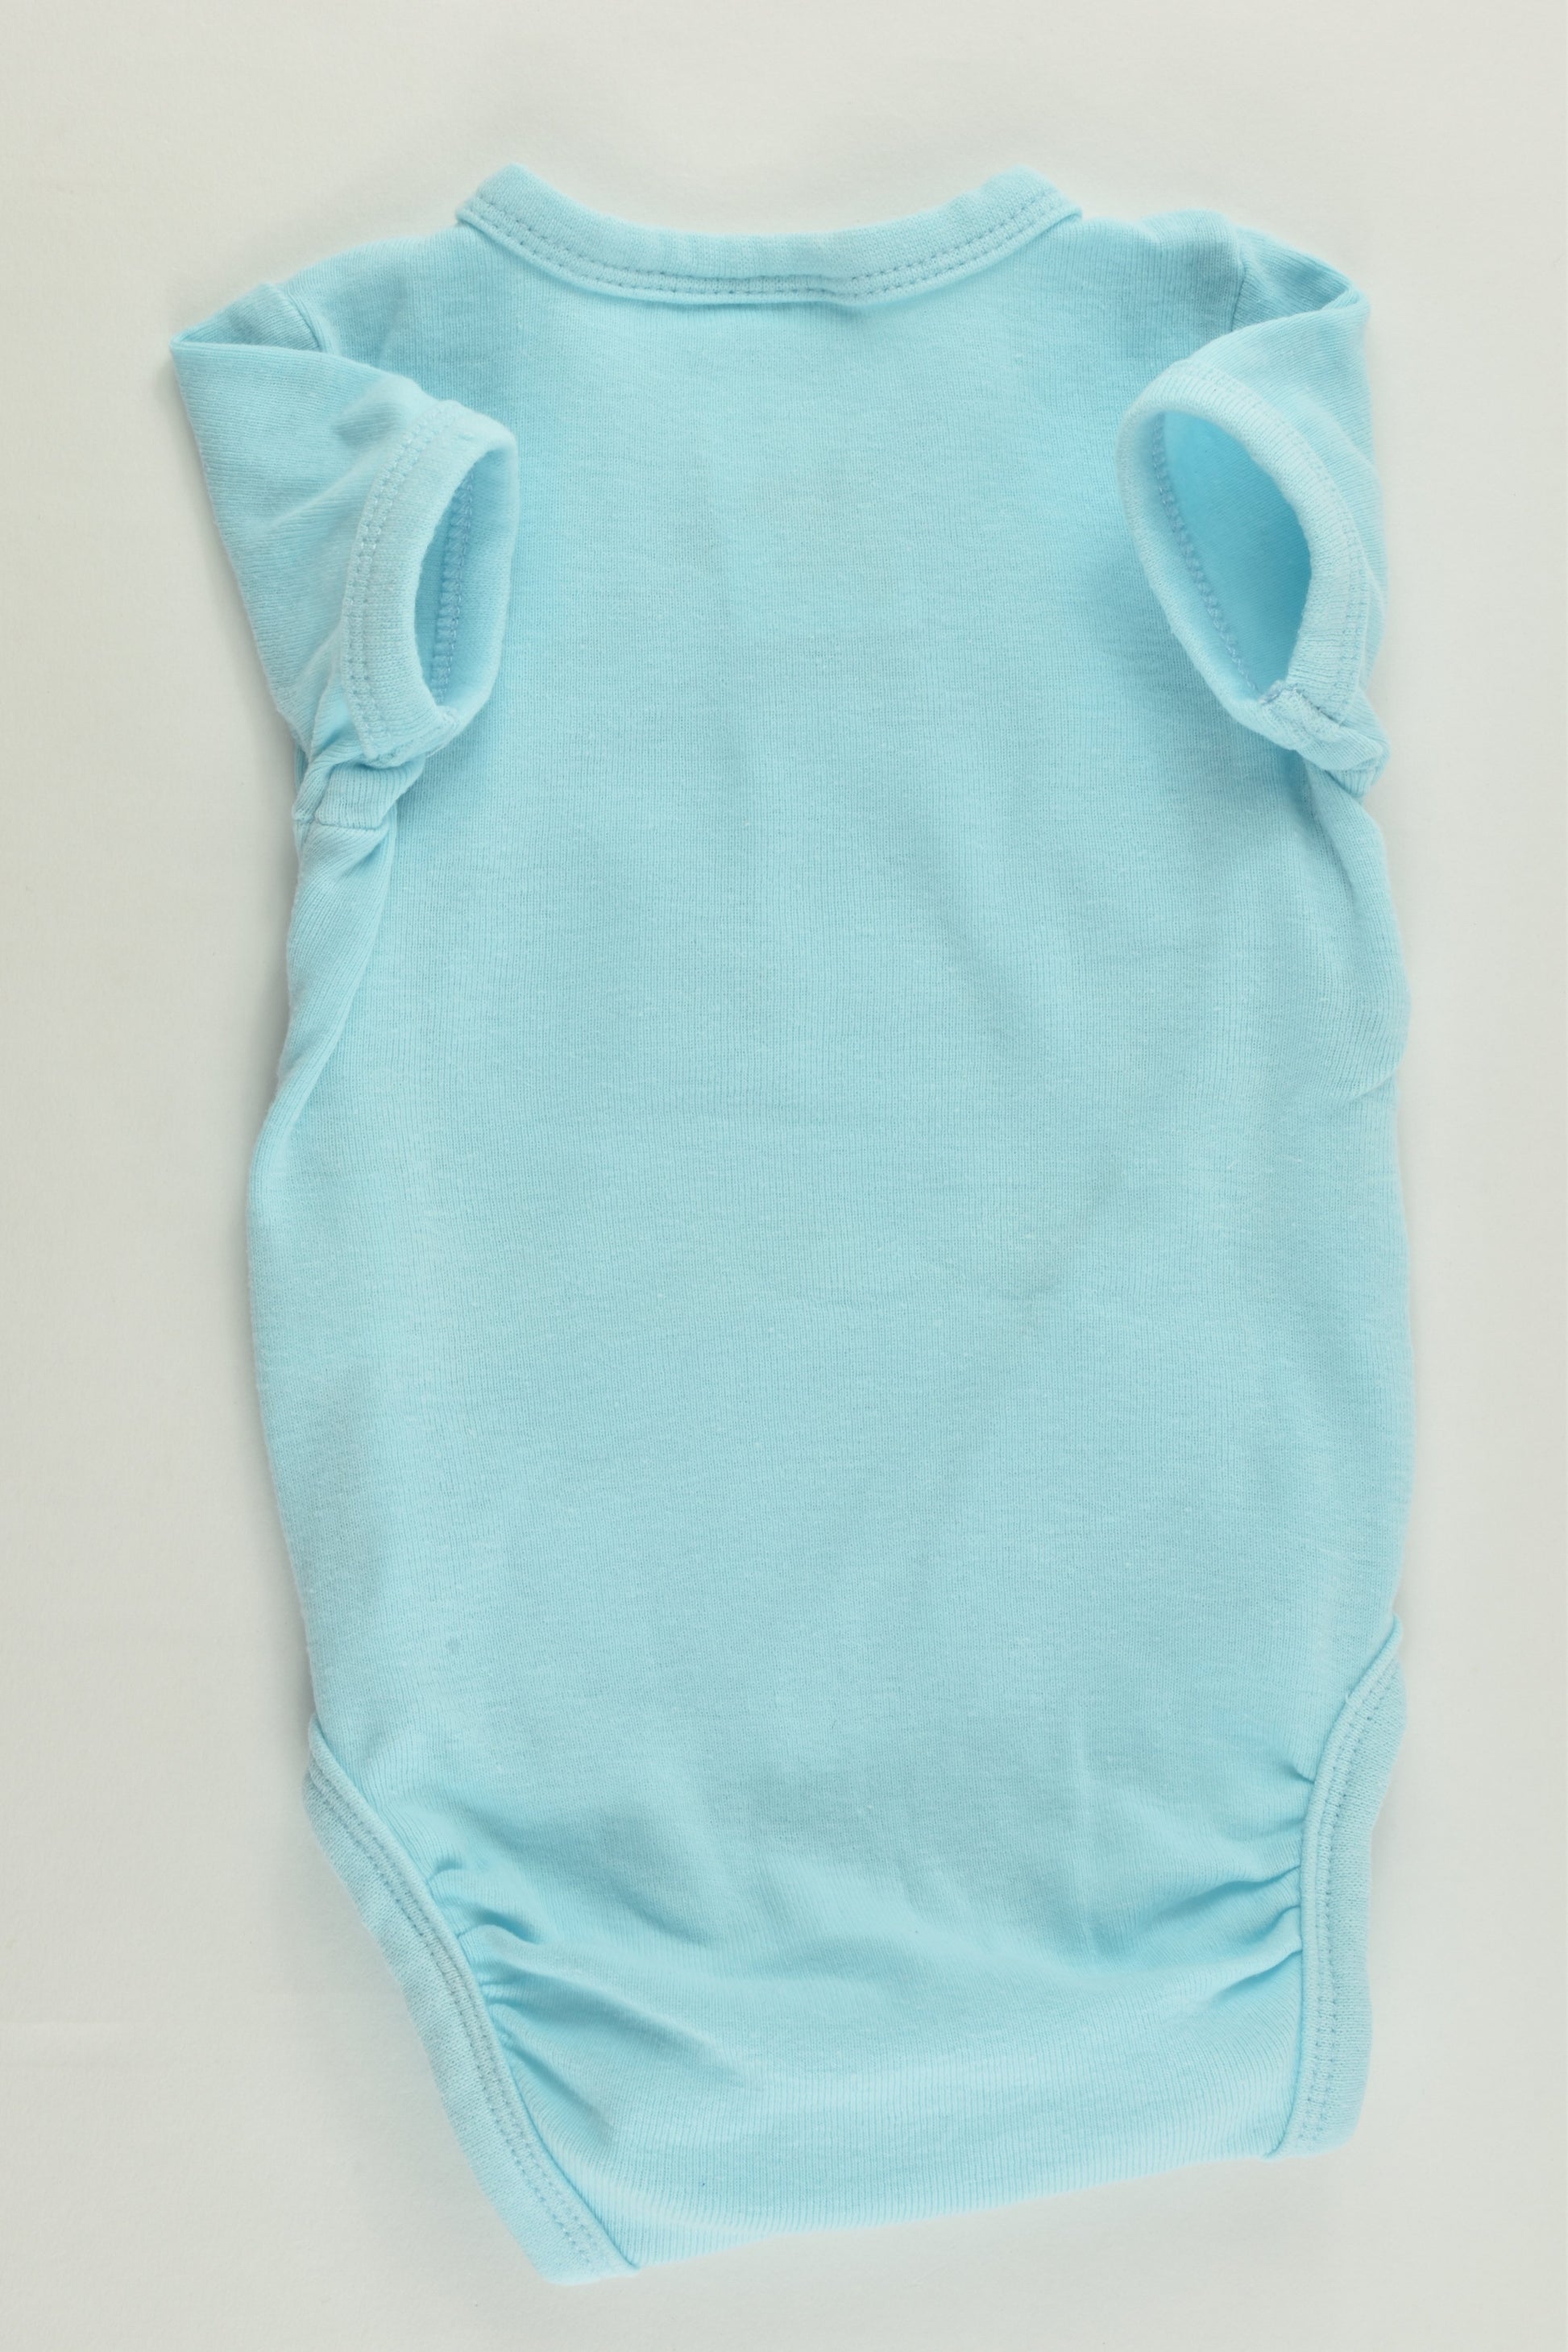 H&M Size 0000 (56 cm) Baby Face Bodysuit